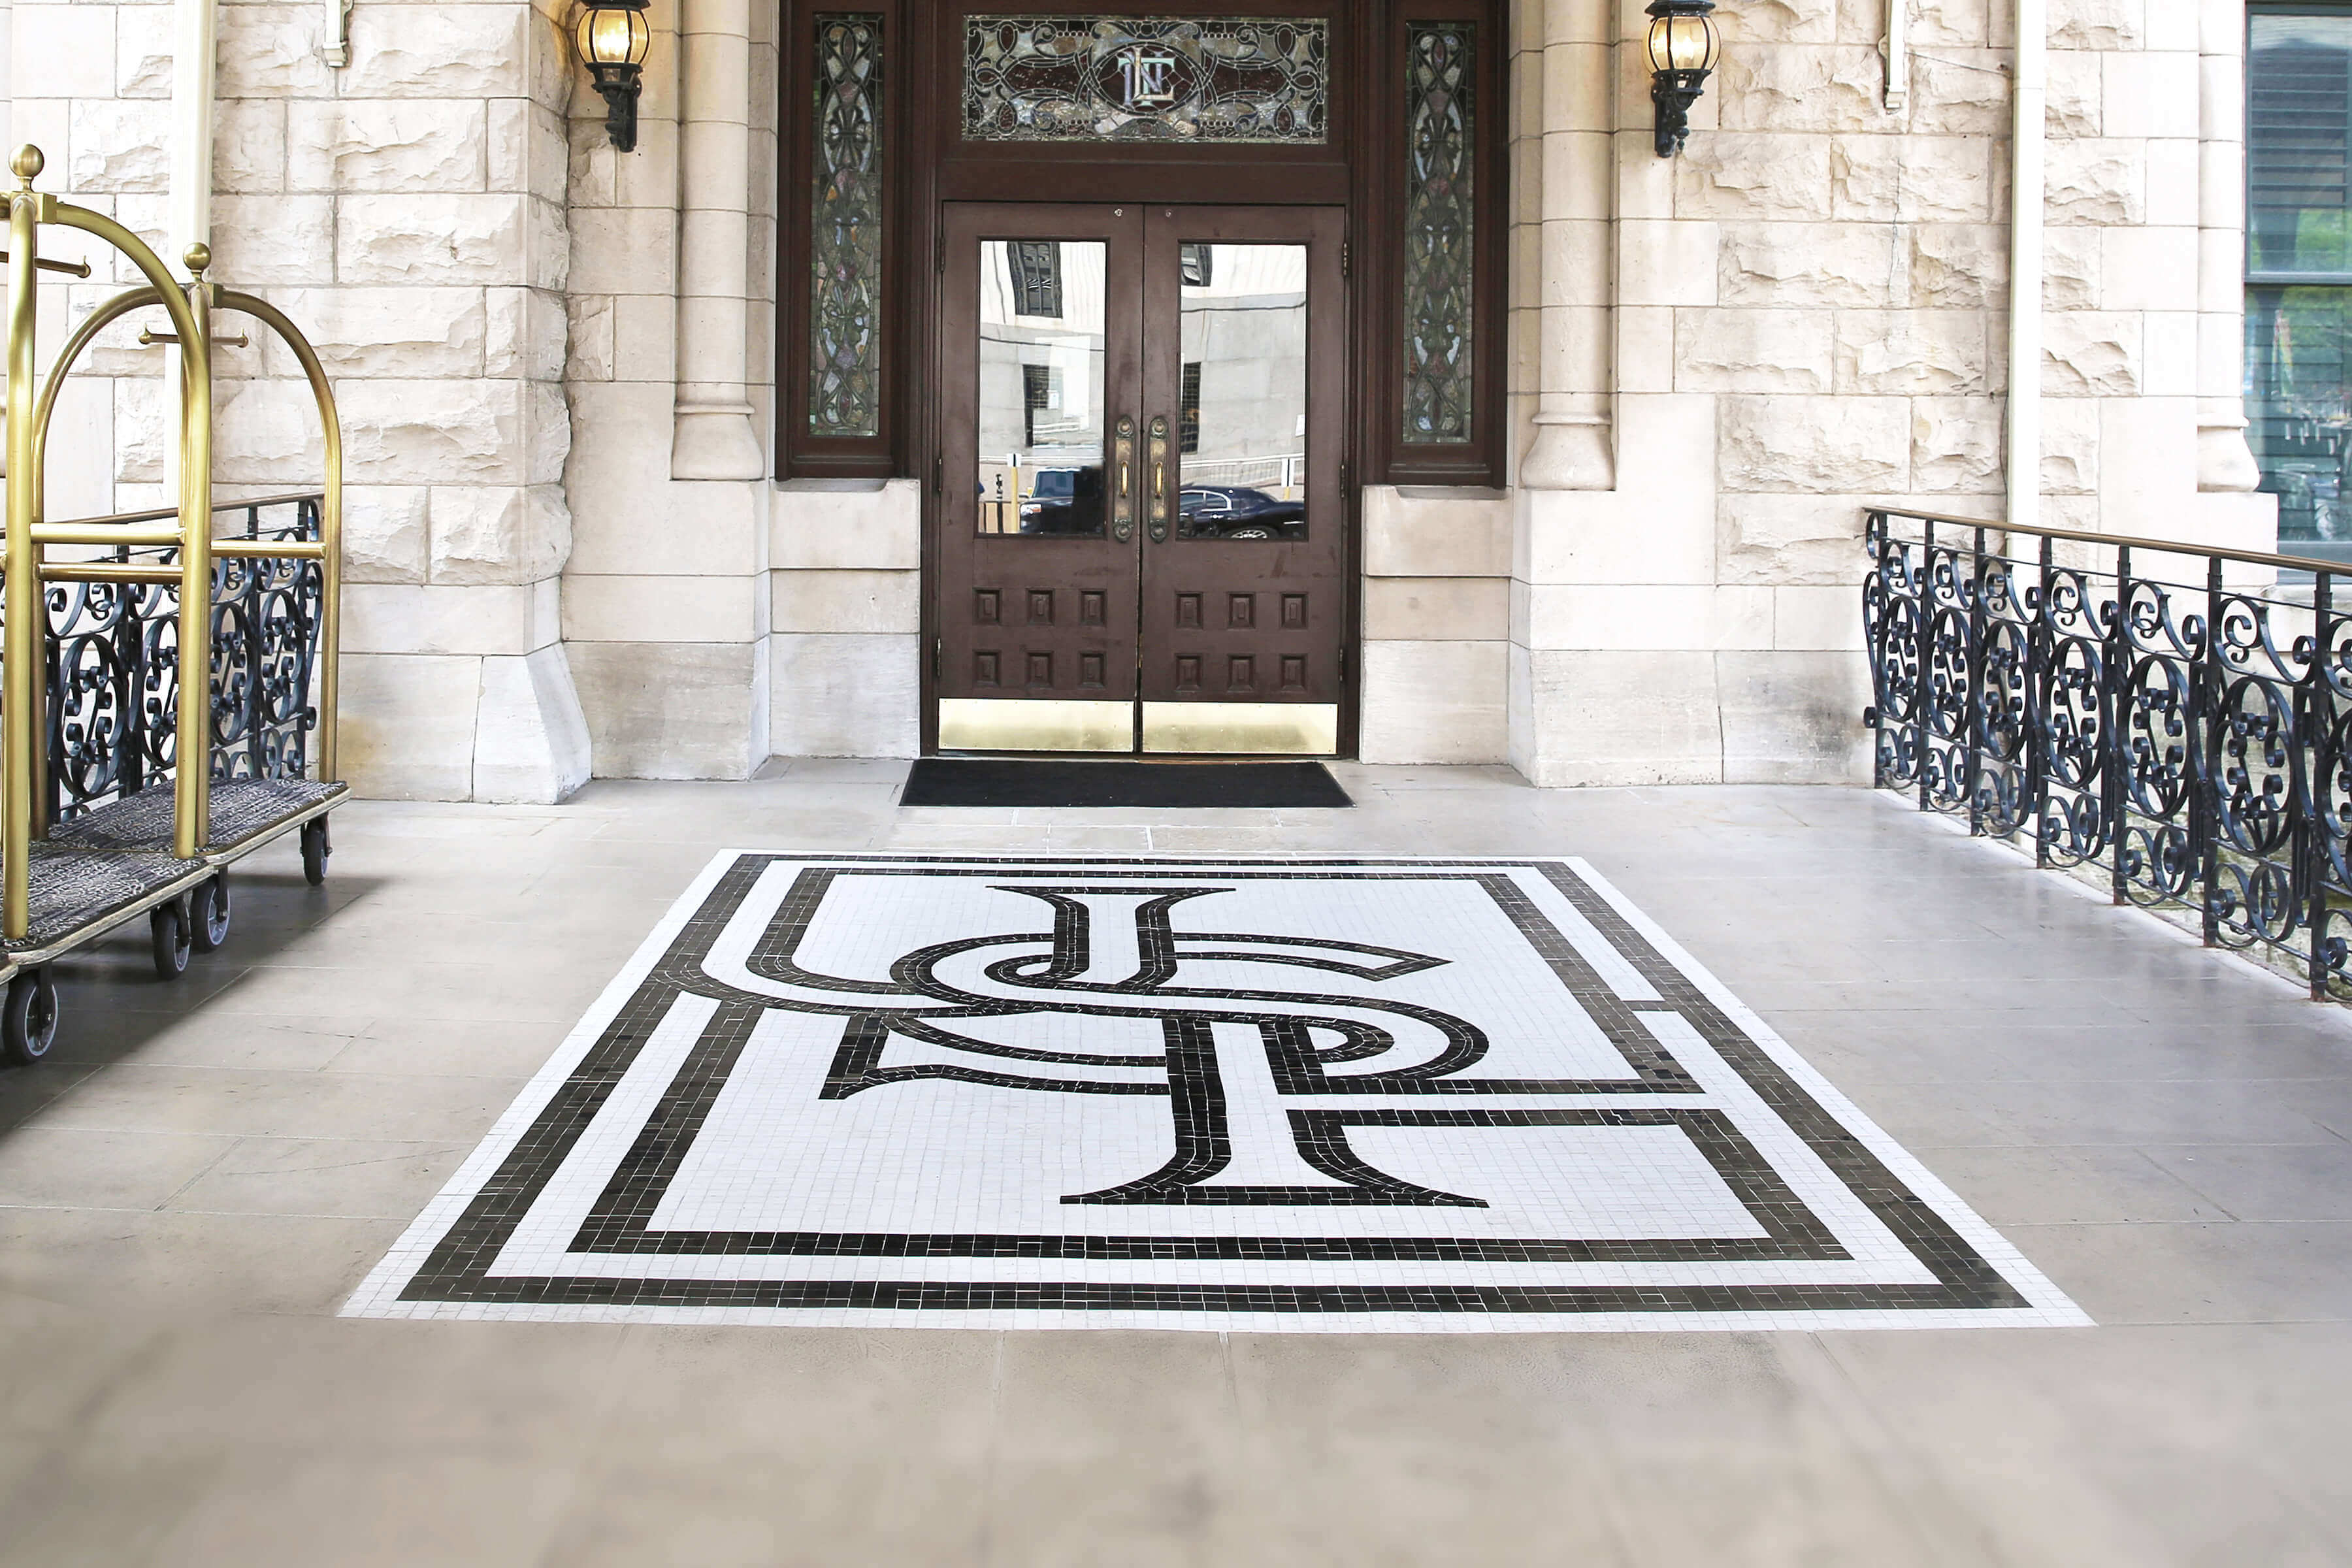 Photo of the Union Station Hotel entry way monogram tile mosaic